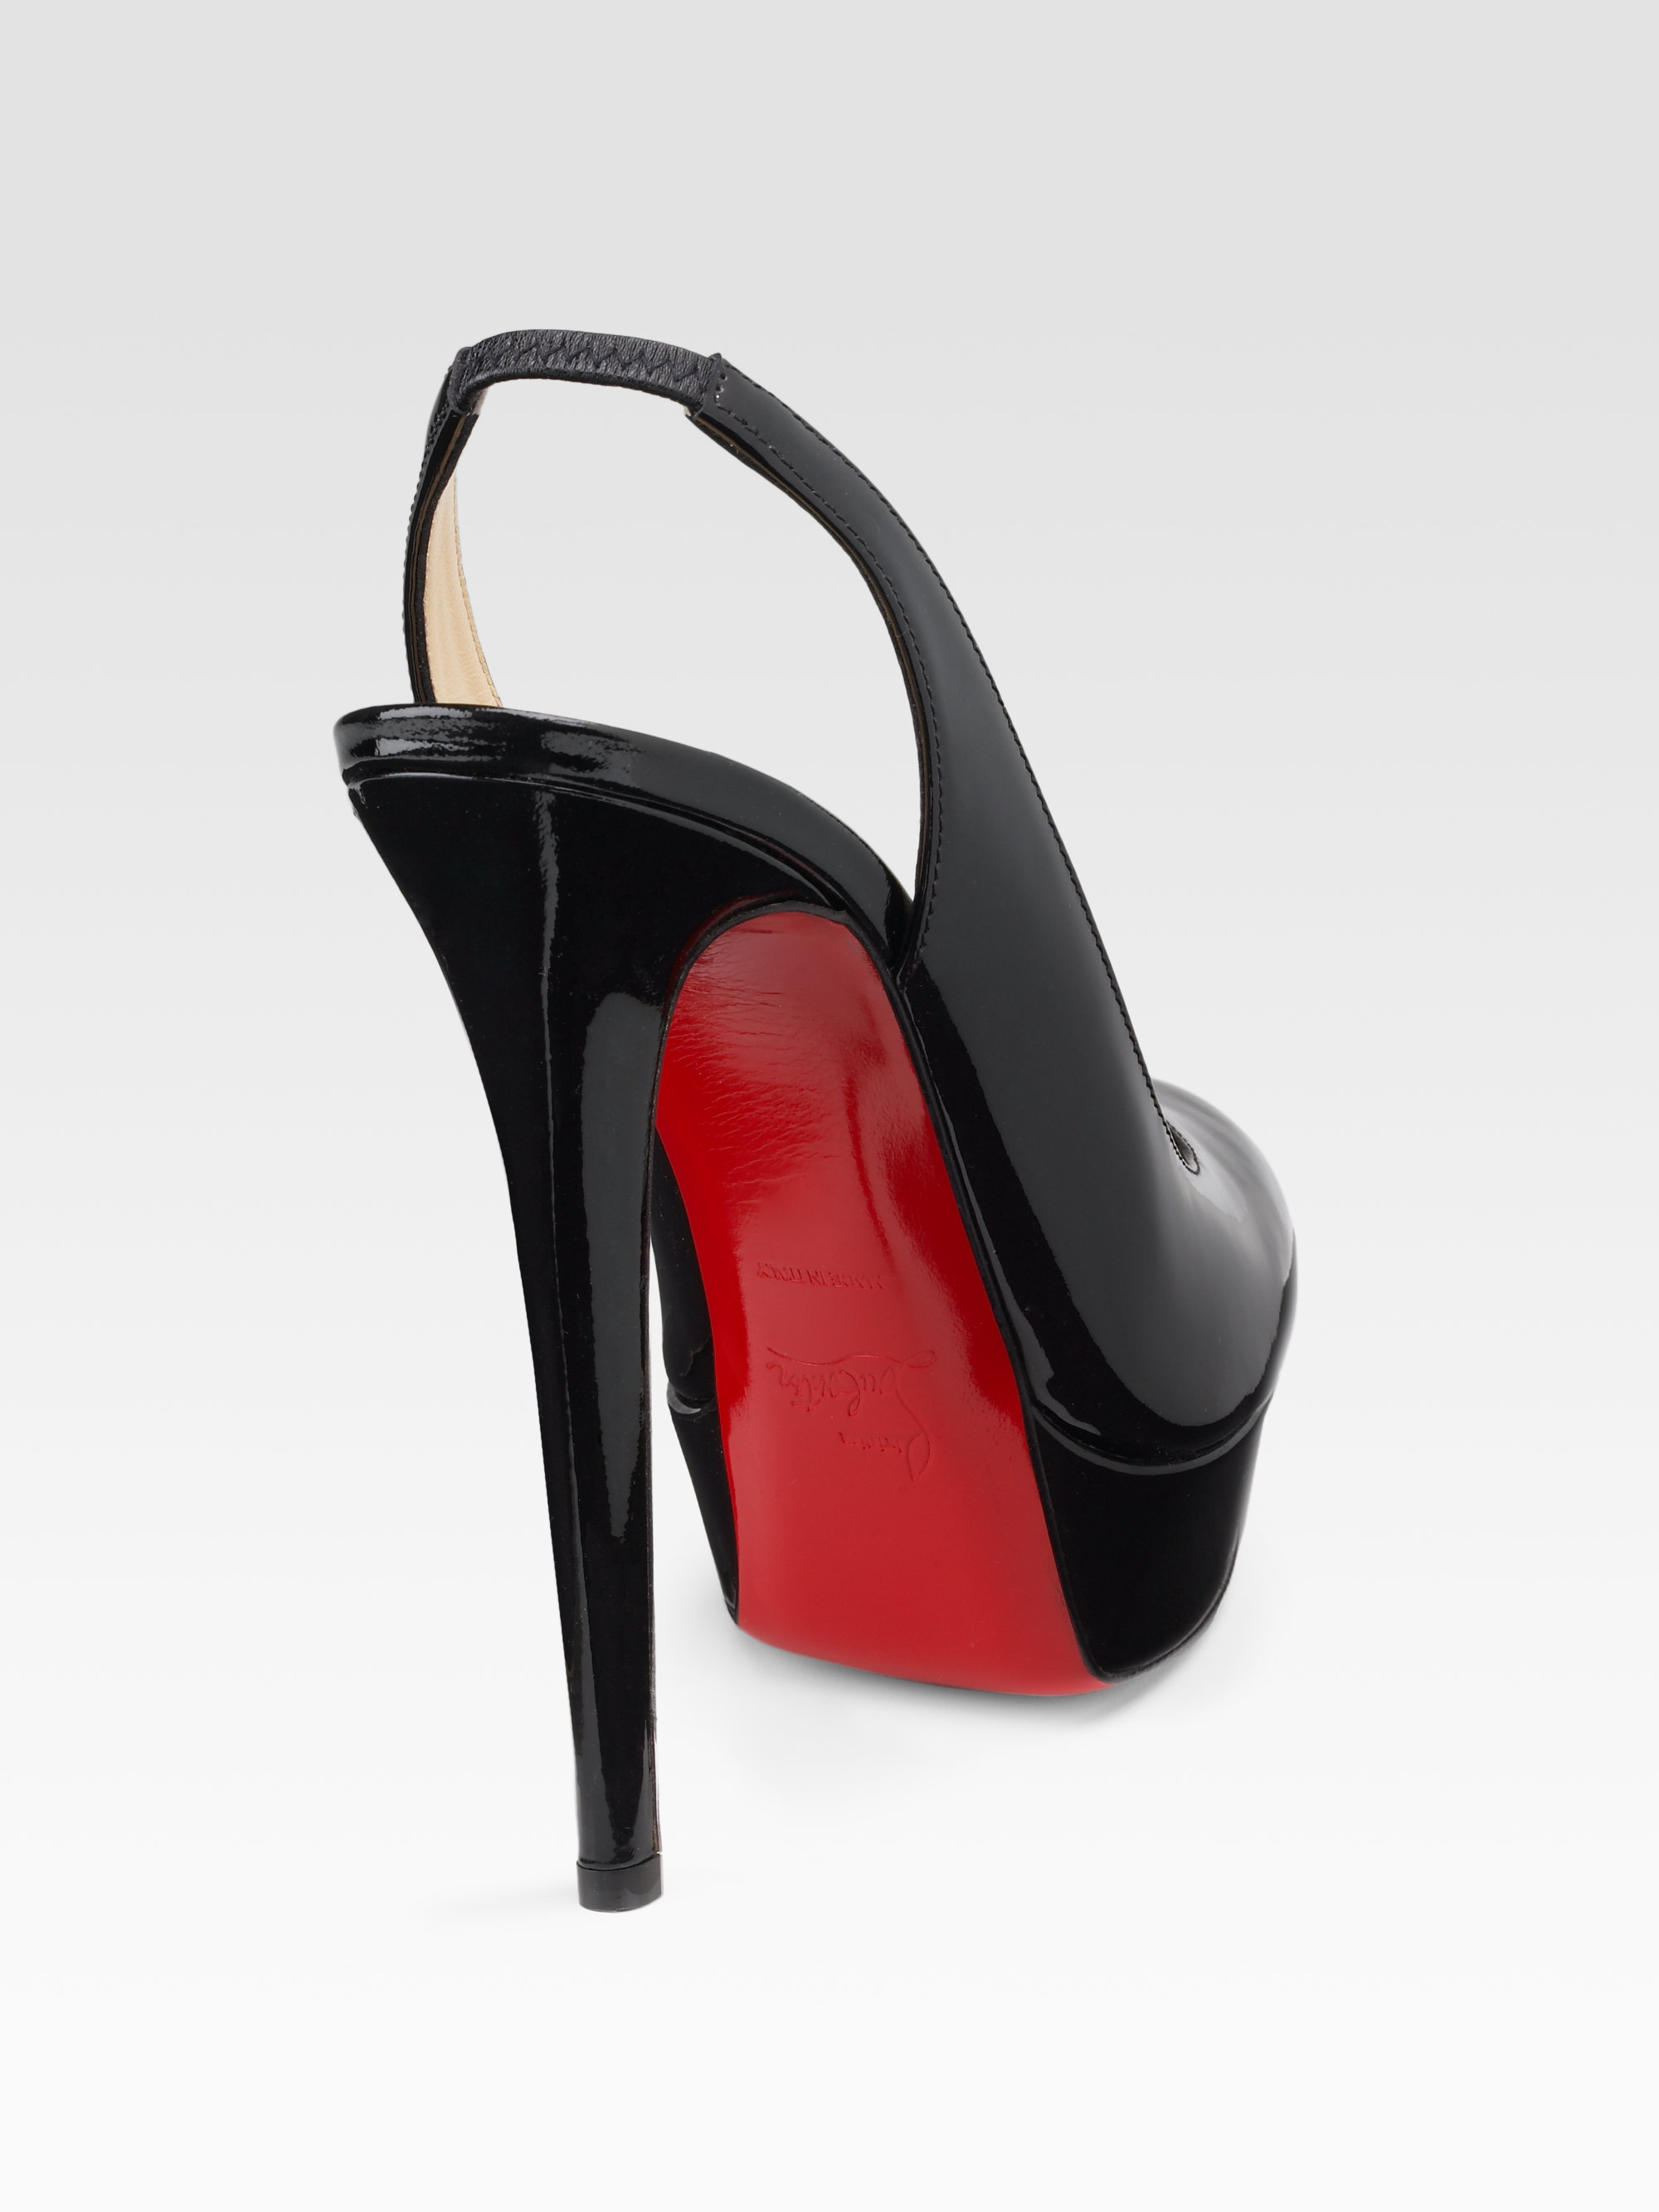 chris louboutin shoes - christian louboutin Bianca slingback pumps Black patent leather ...